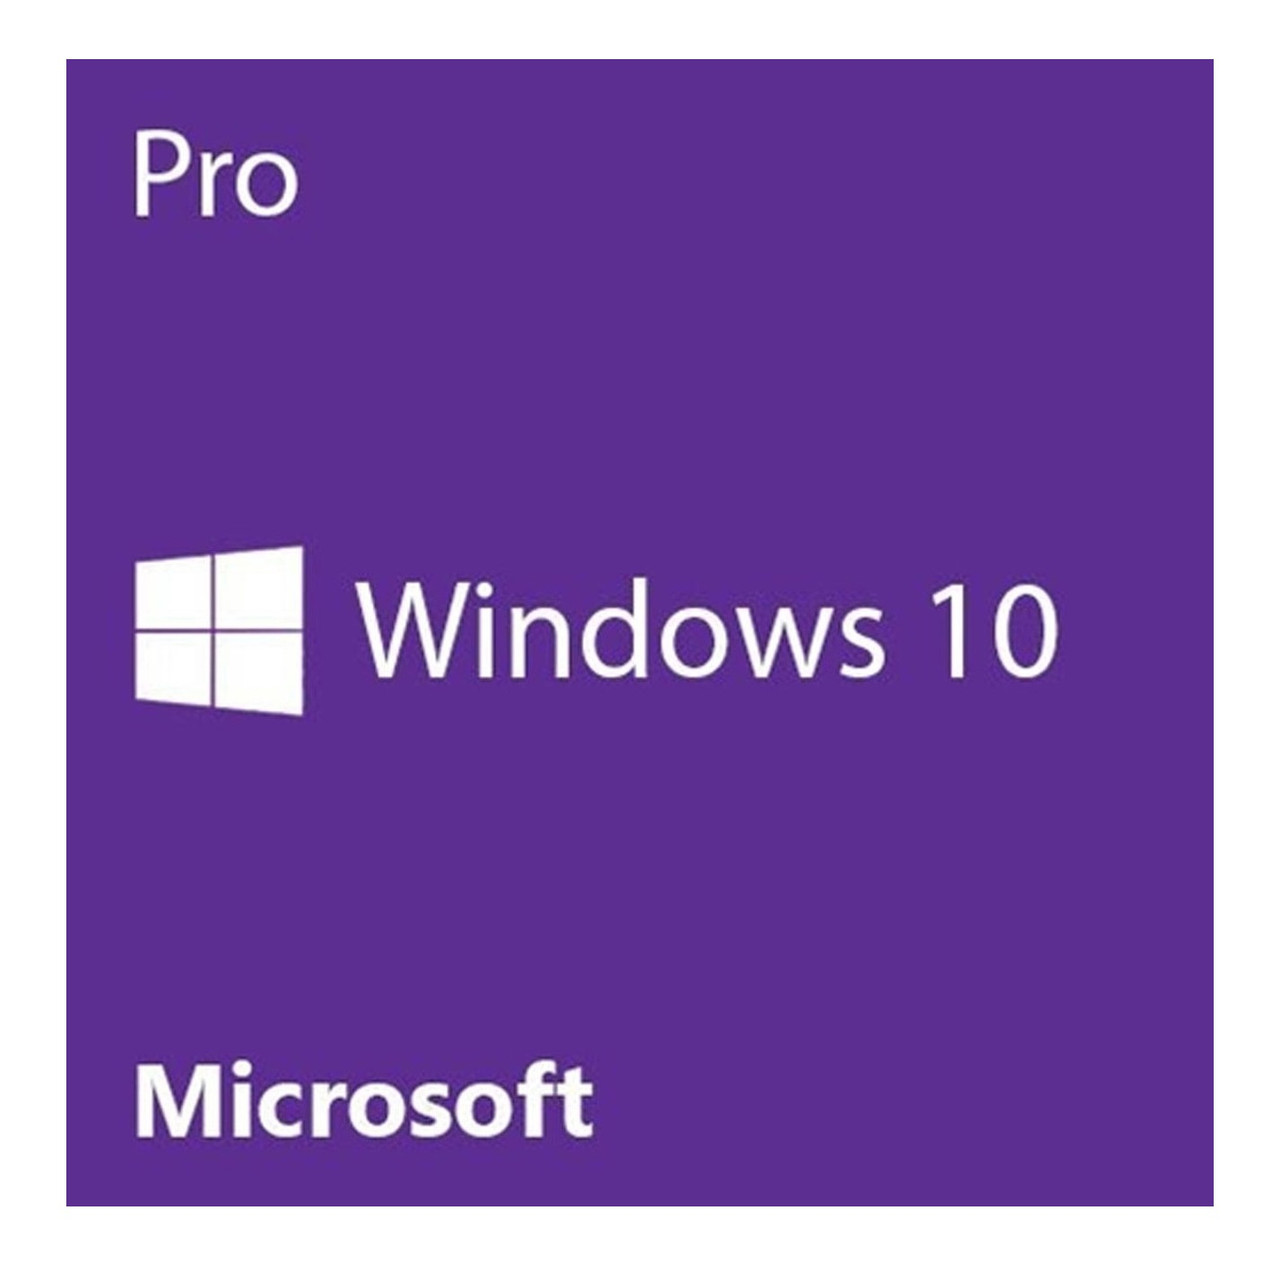 Microsoft Windows 10 Pro 64 Bit System Builder OEM FQC-08930